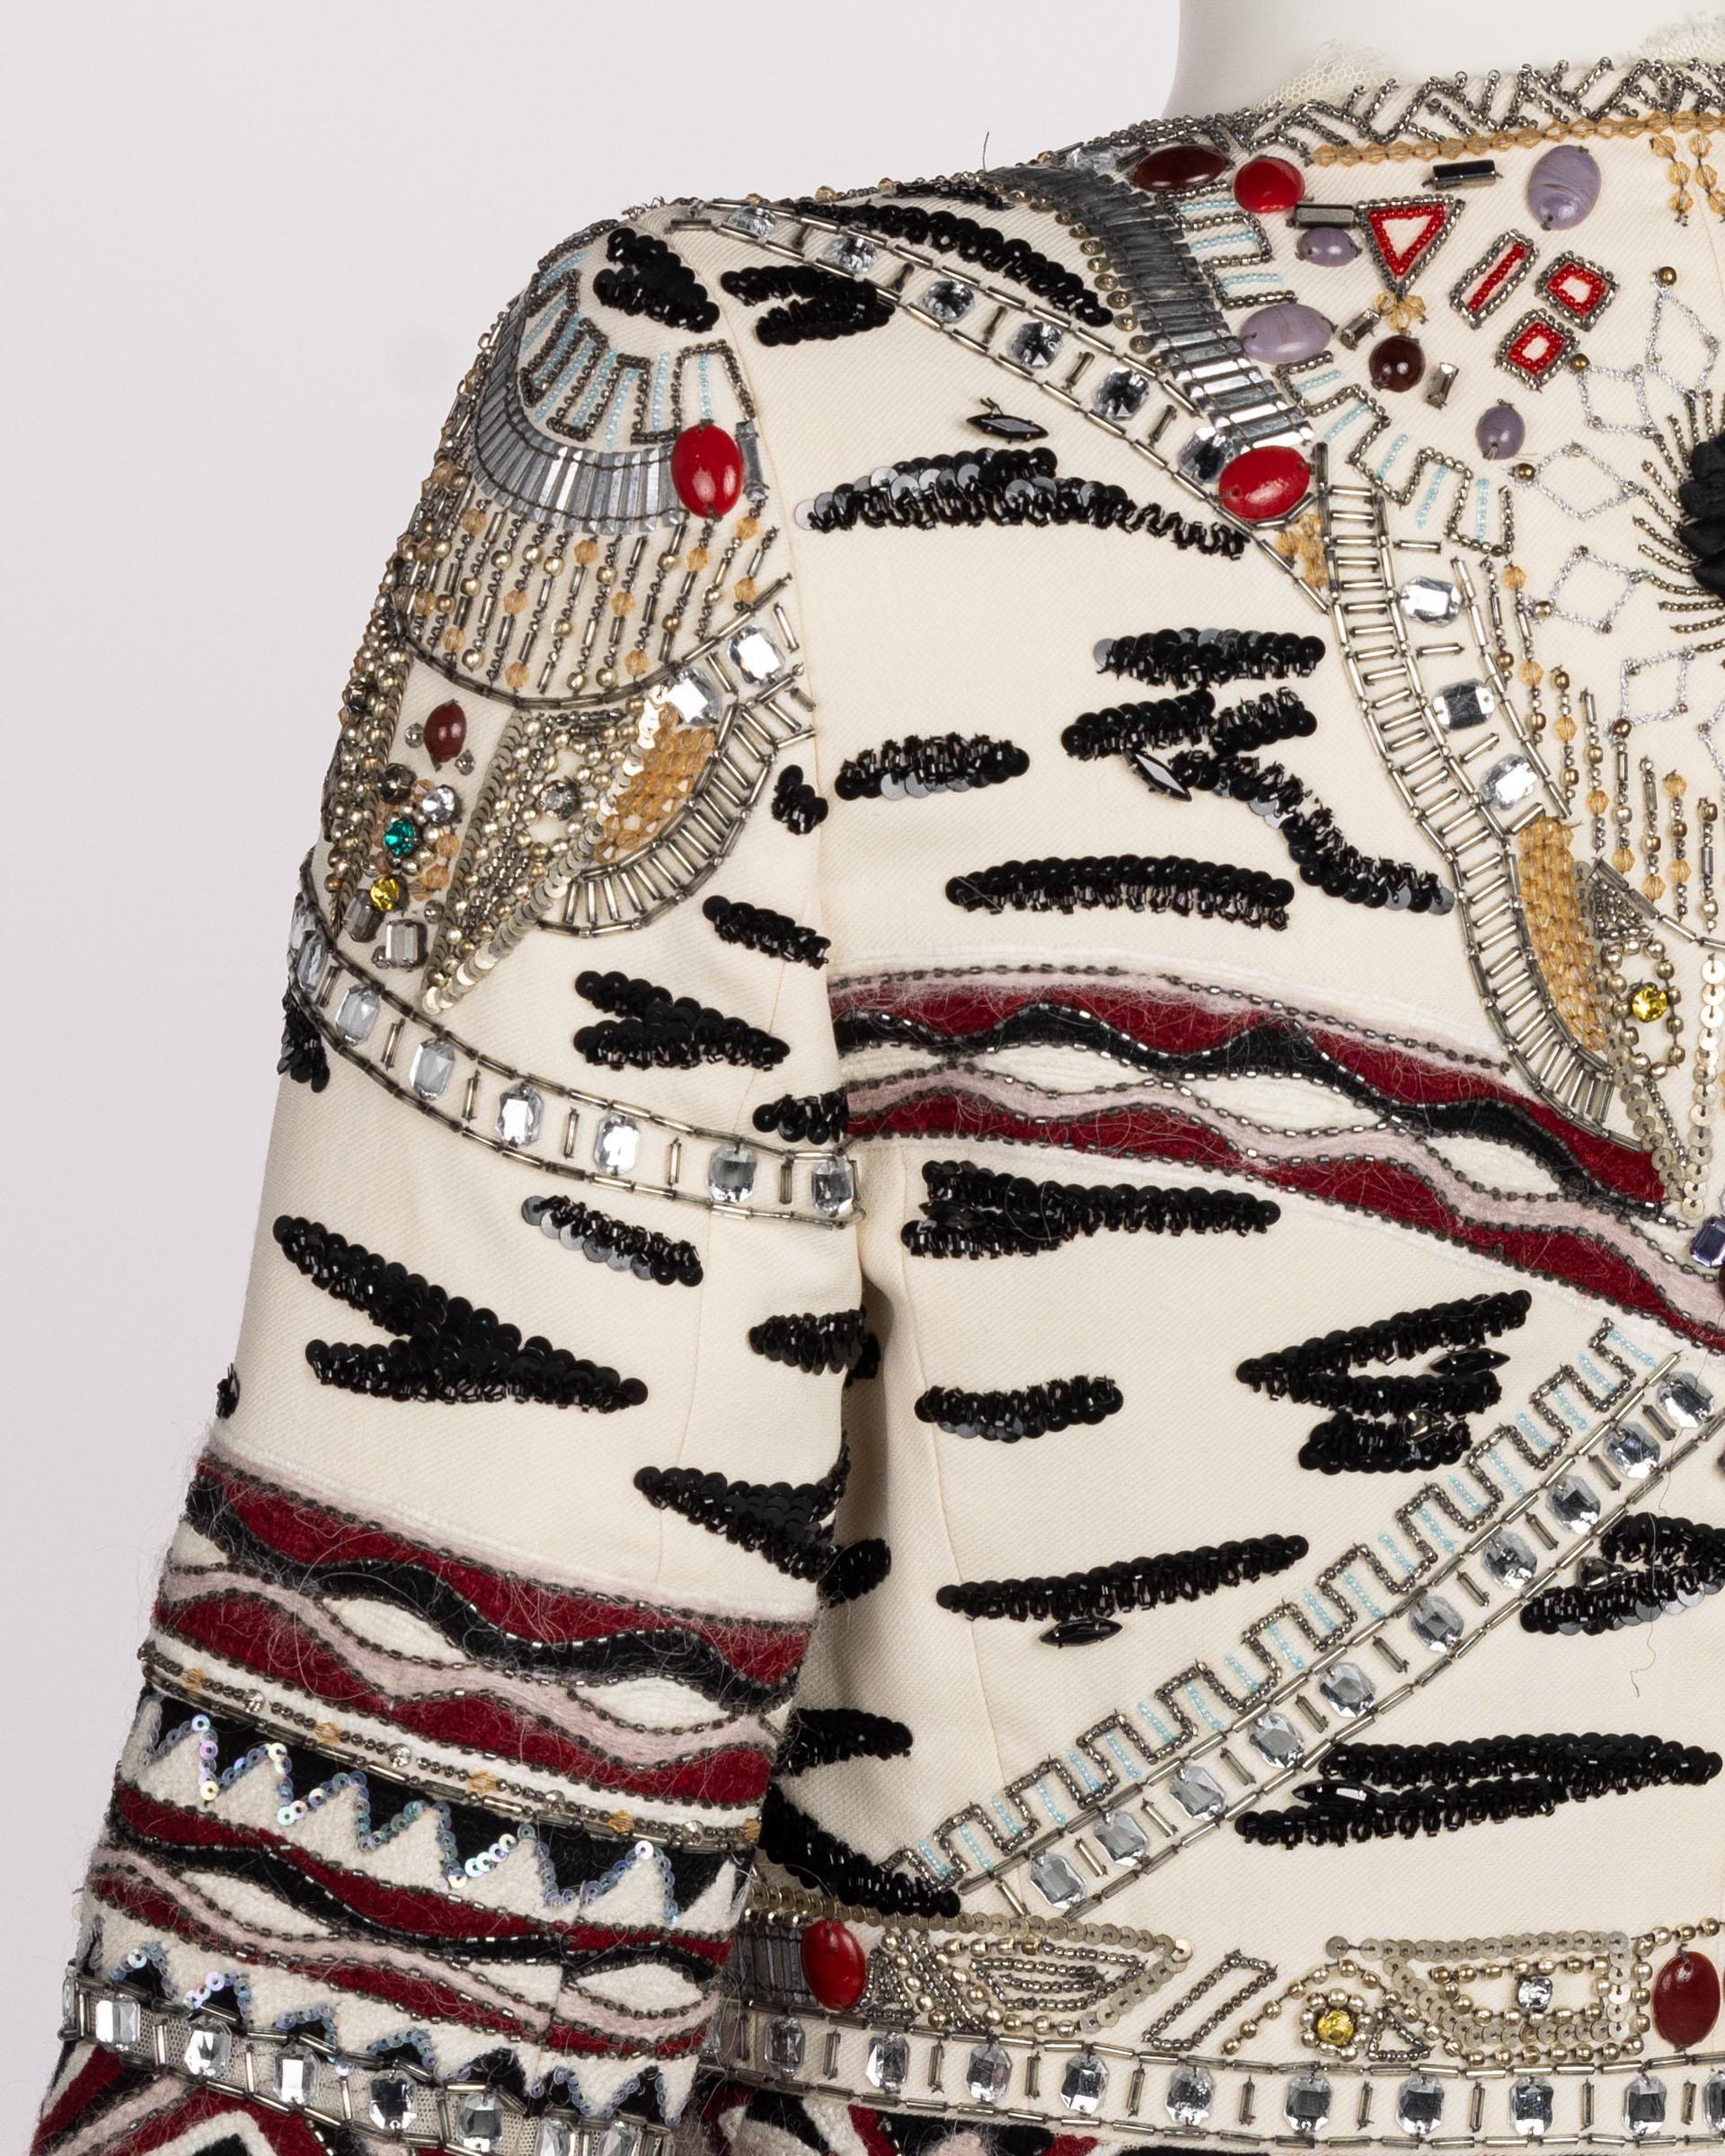  Emilio Pucci Embellished Wool Silk & Cotton Blend Jacket, Pre -Fall 2012 Runway 8